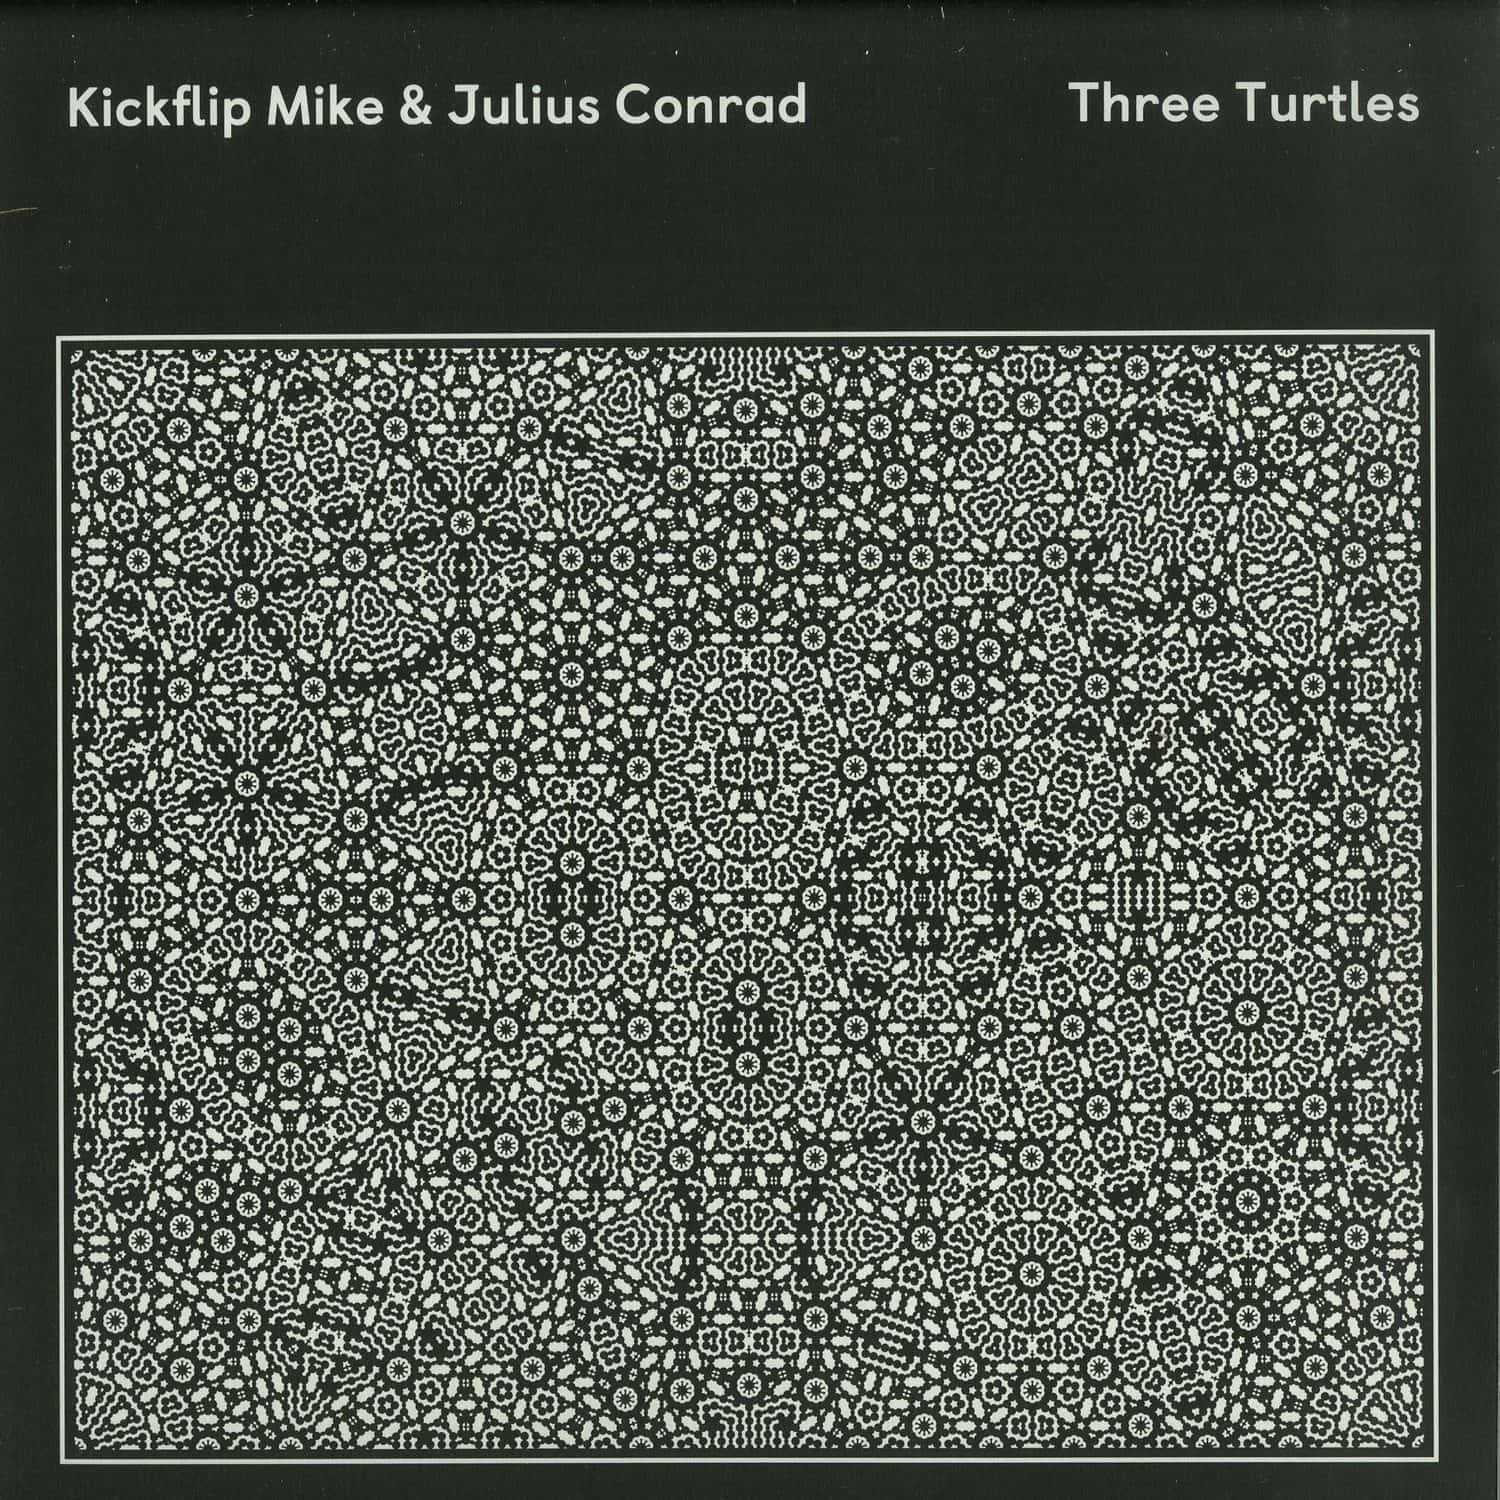 Kickflip Mike & Julius Conrad - THREE TURTLES EP